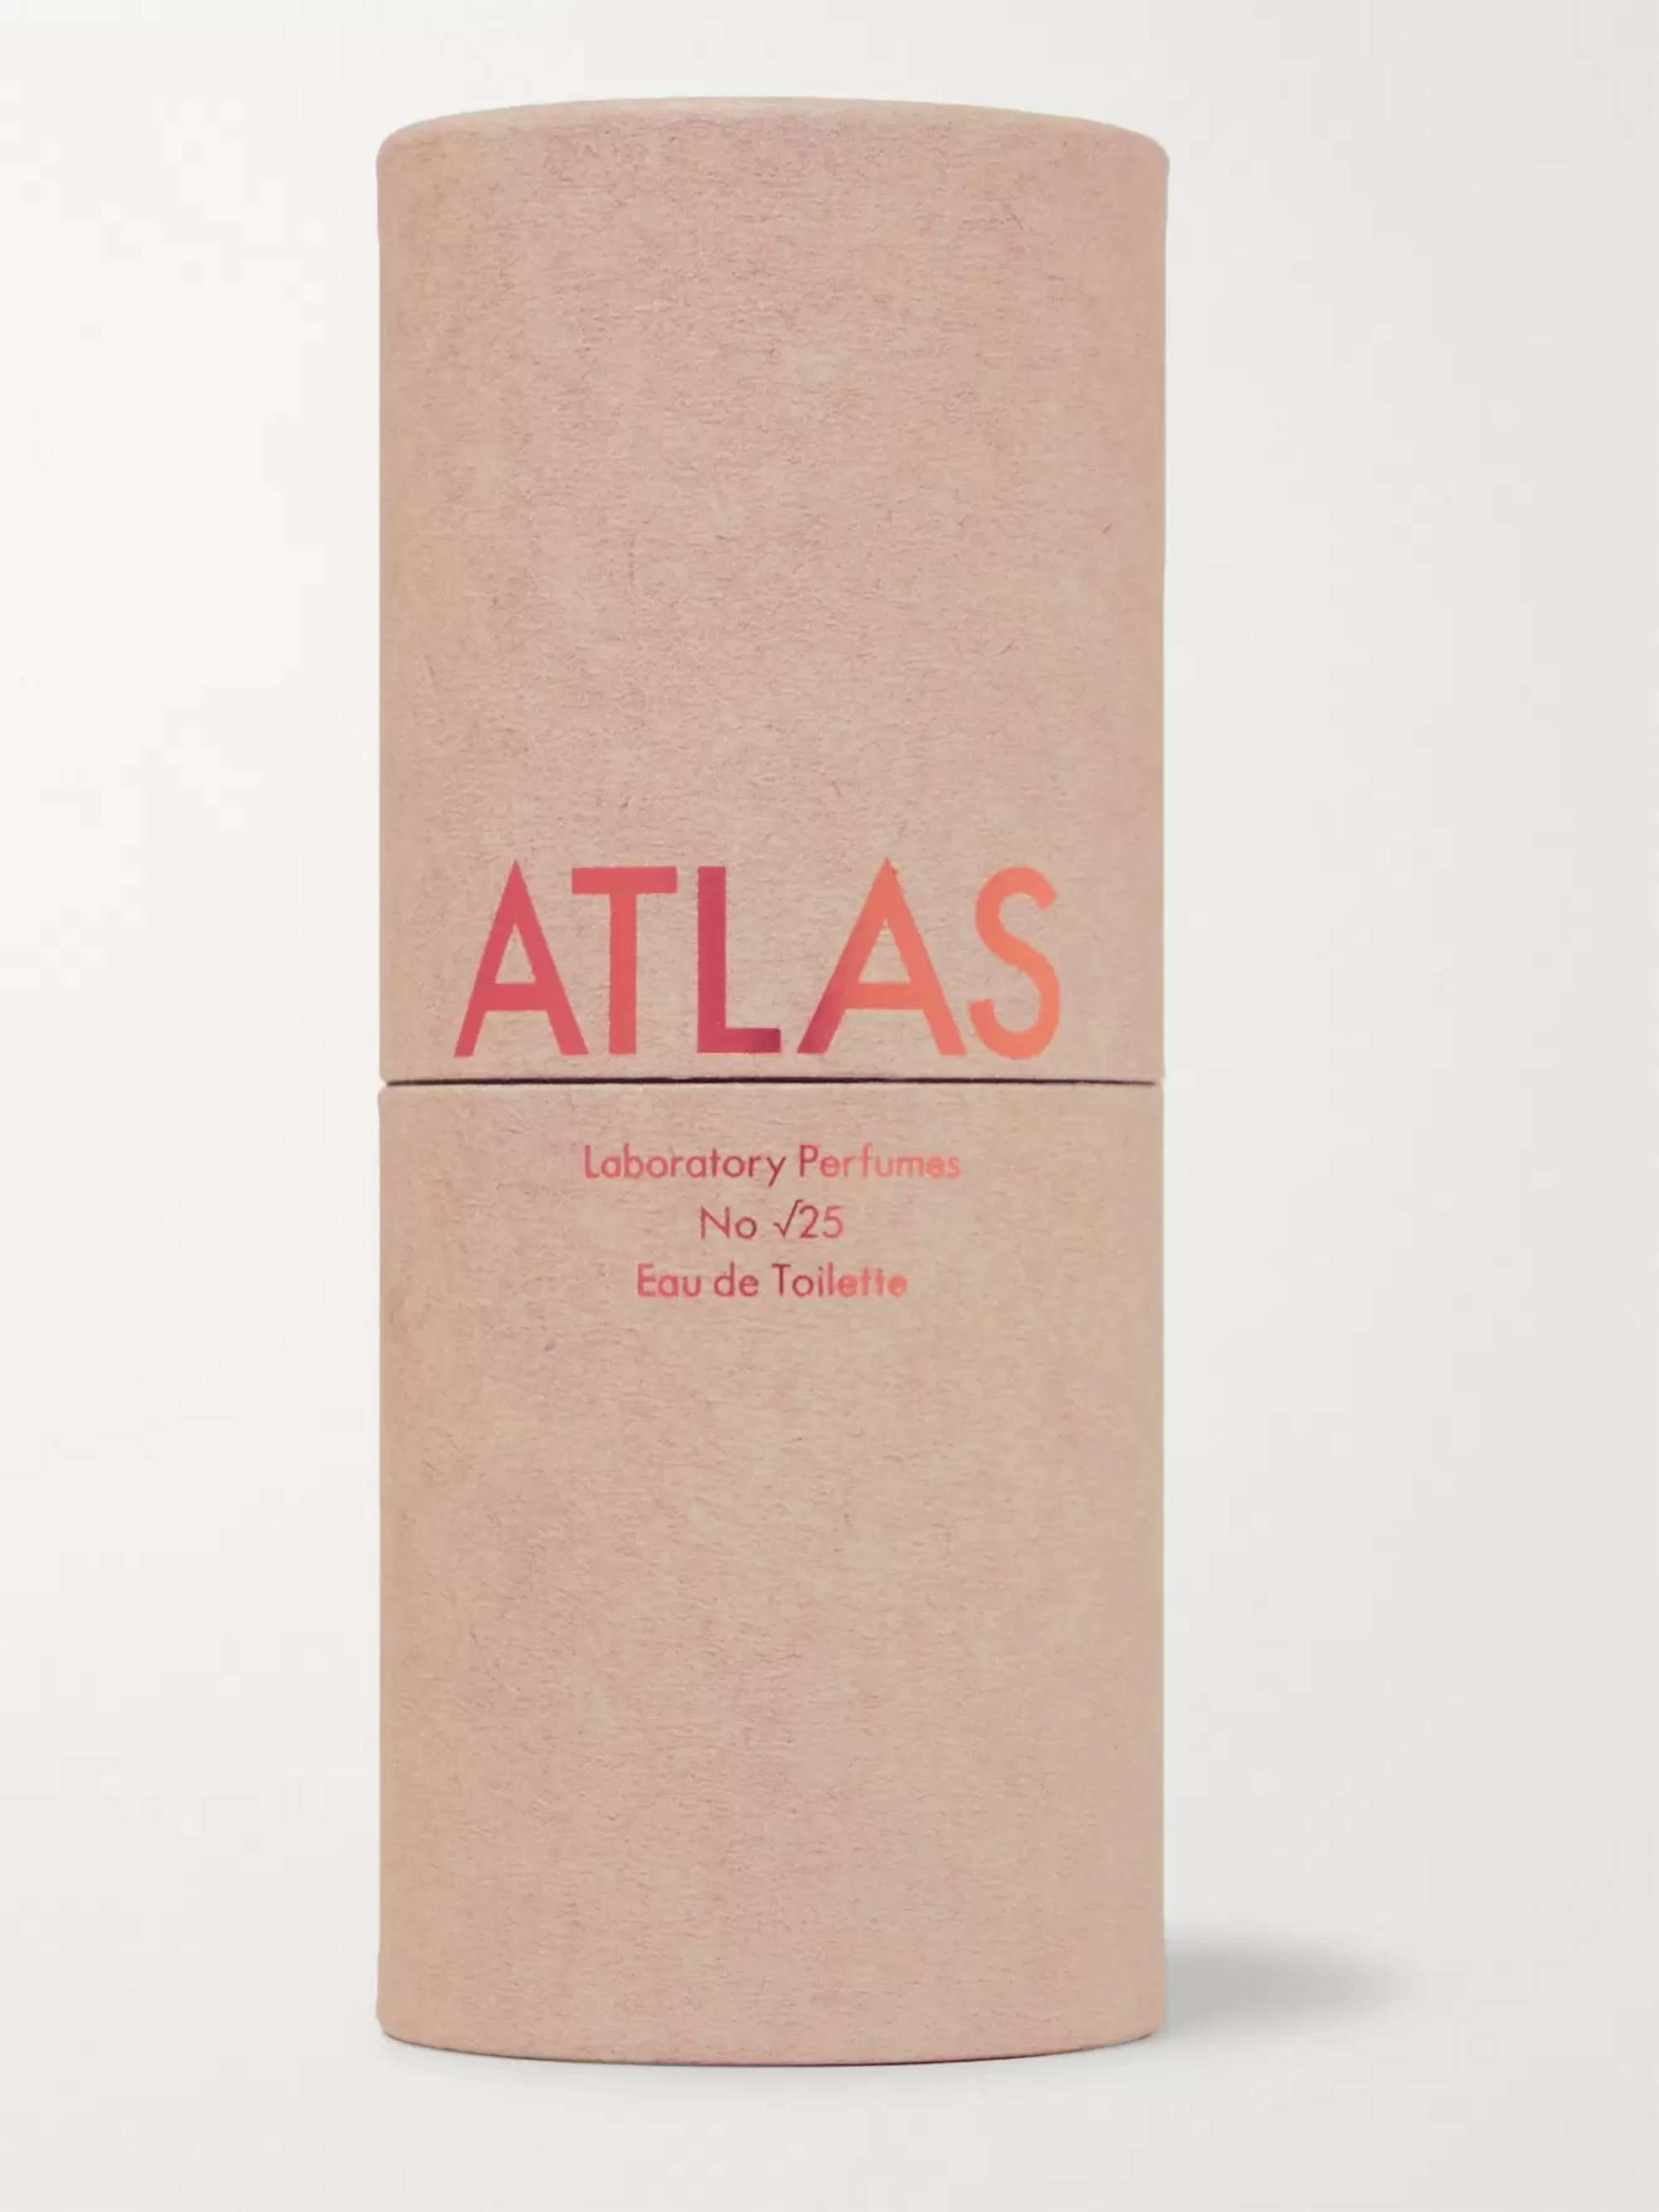 LABORATORY PERFUMES No. 25 Atlas Eau de Toilette, 100ml